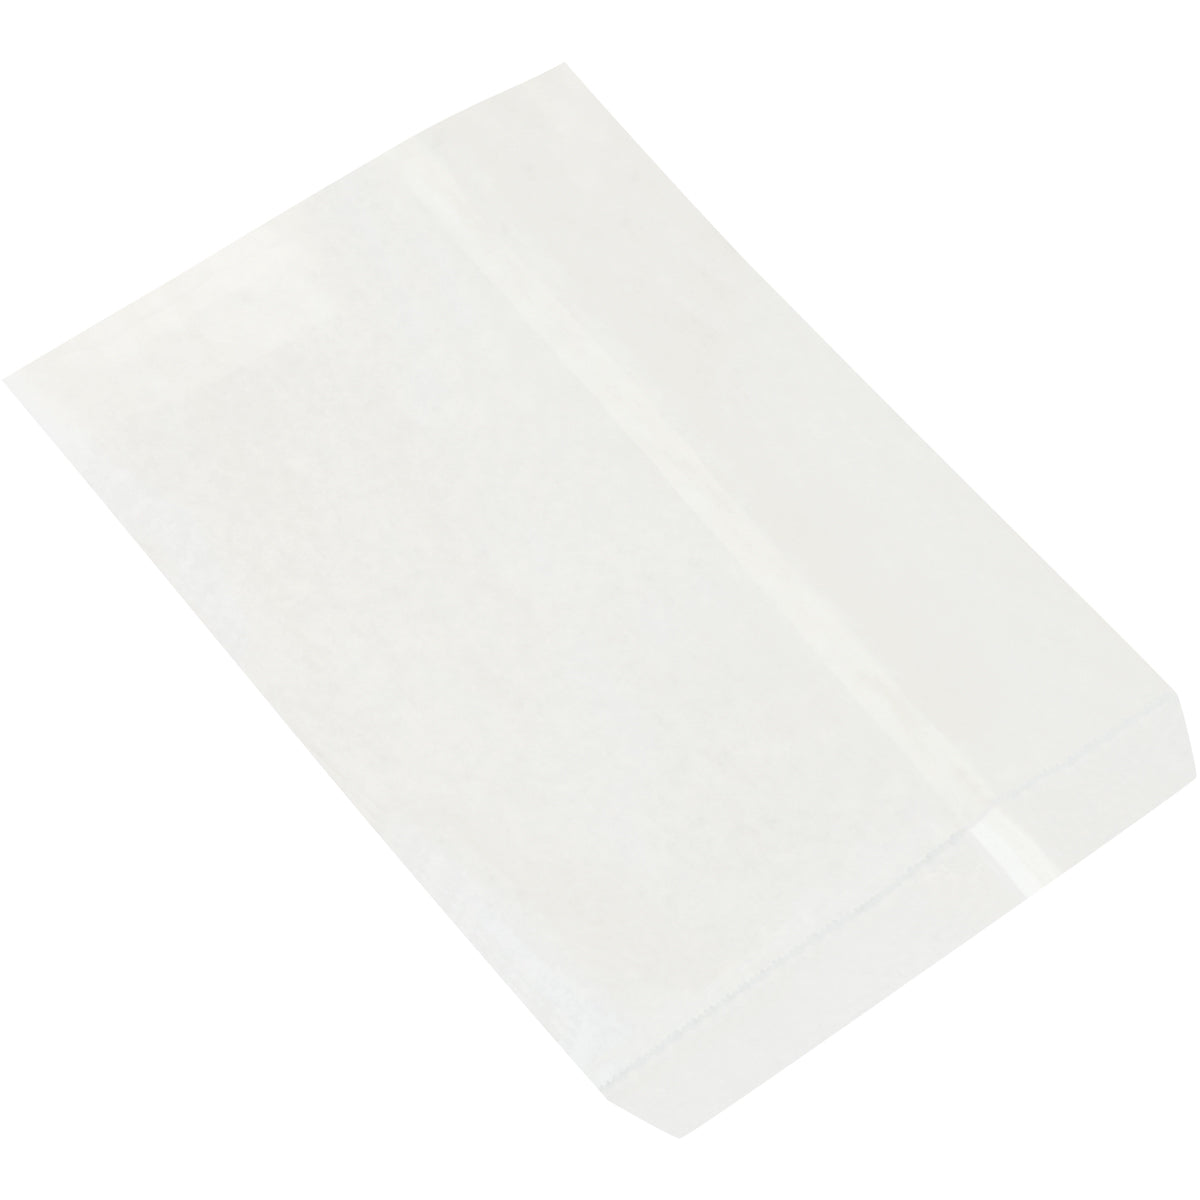 8 1/2 x 11 White Flat Merchandise Bags 2000/Case